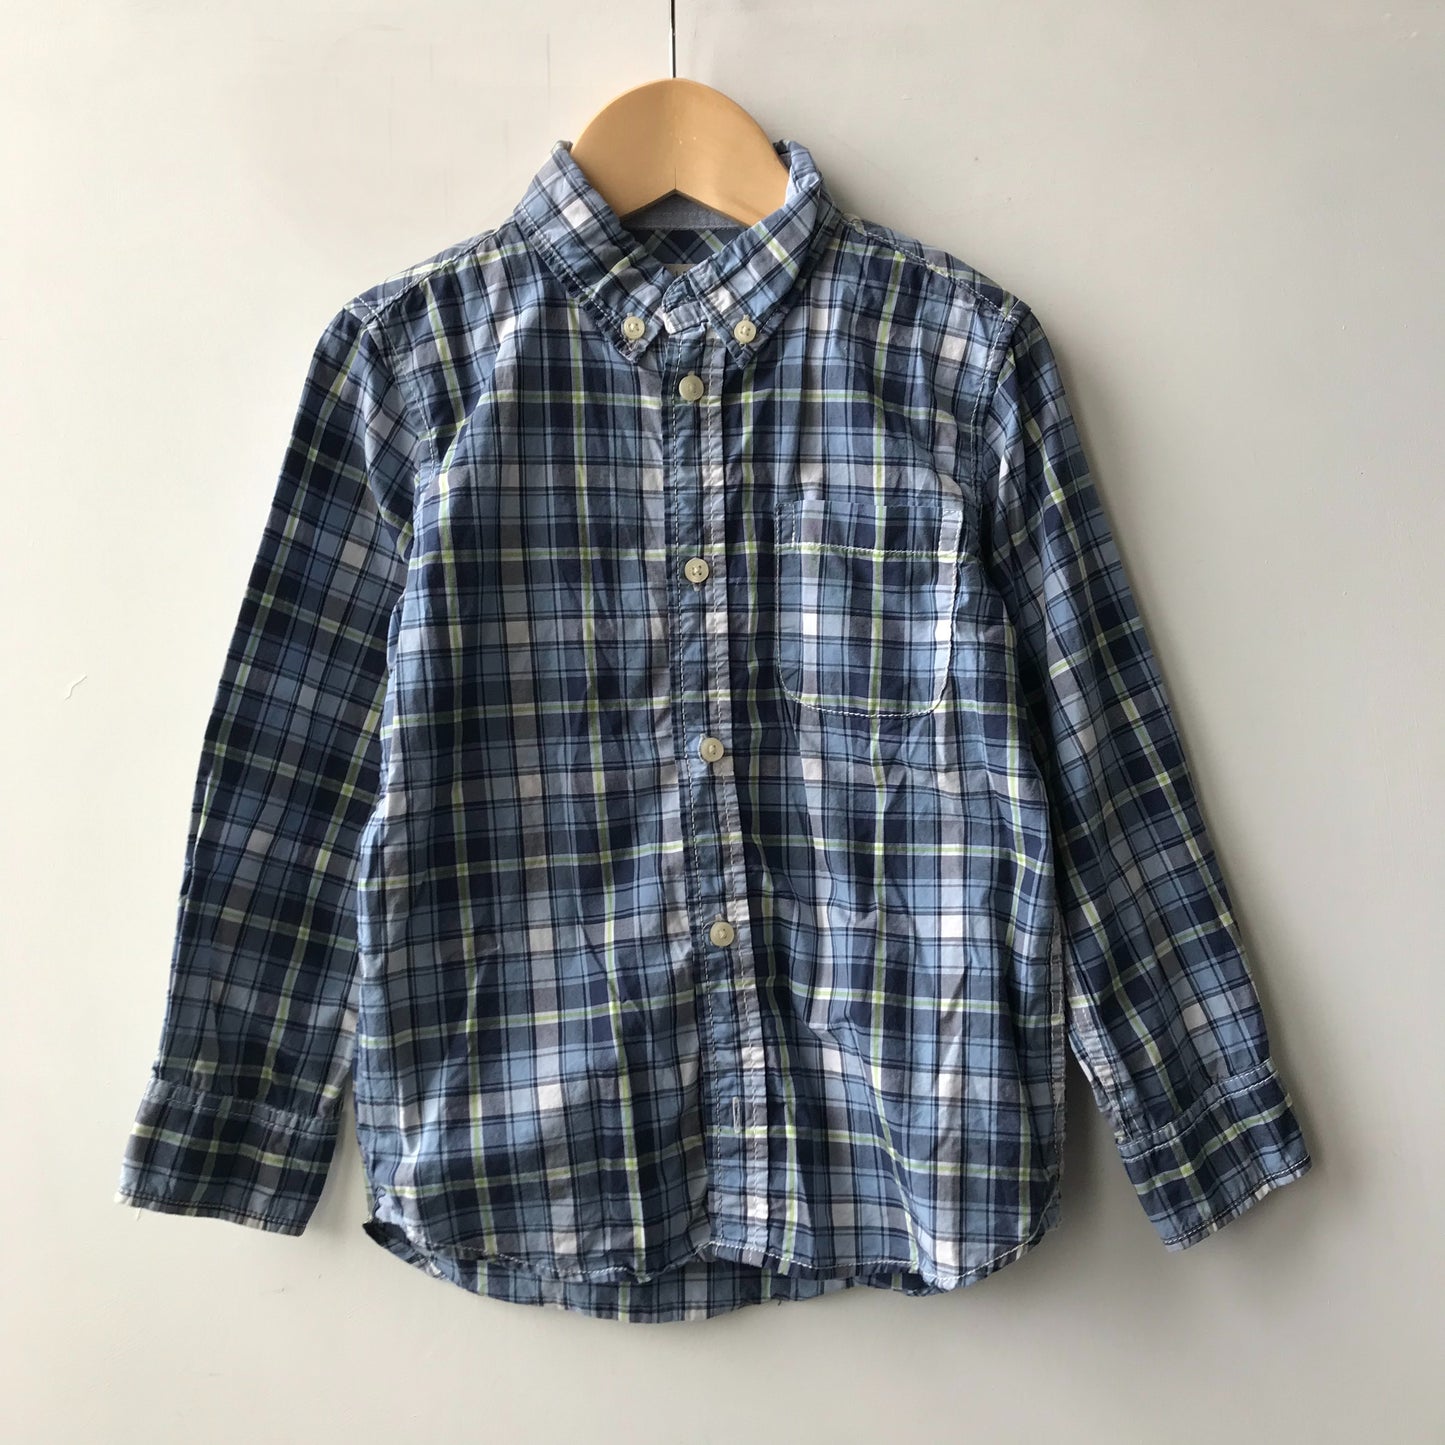 Shirt - Blue Check - Age 4